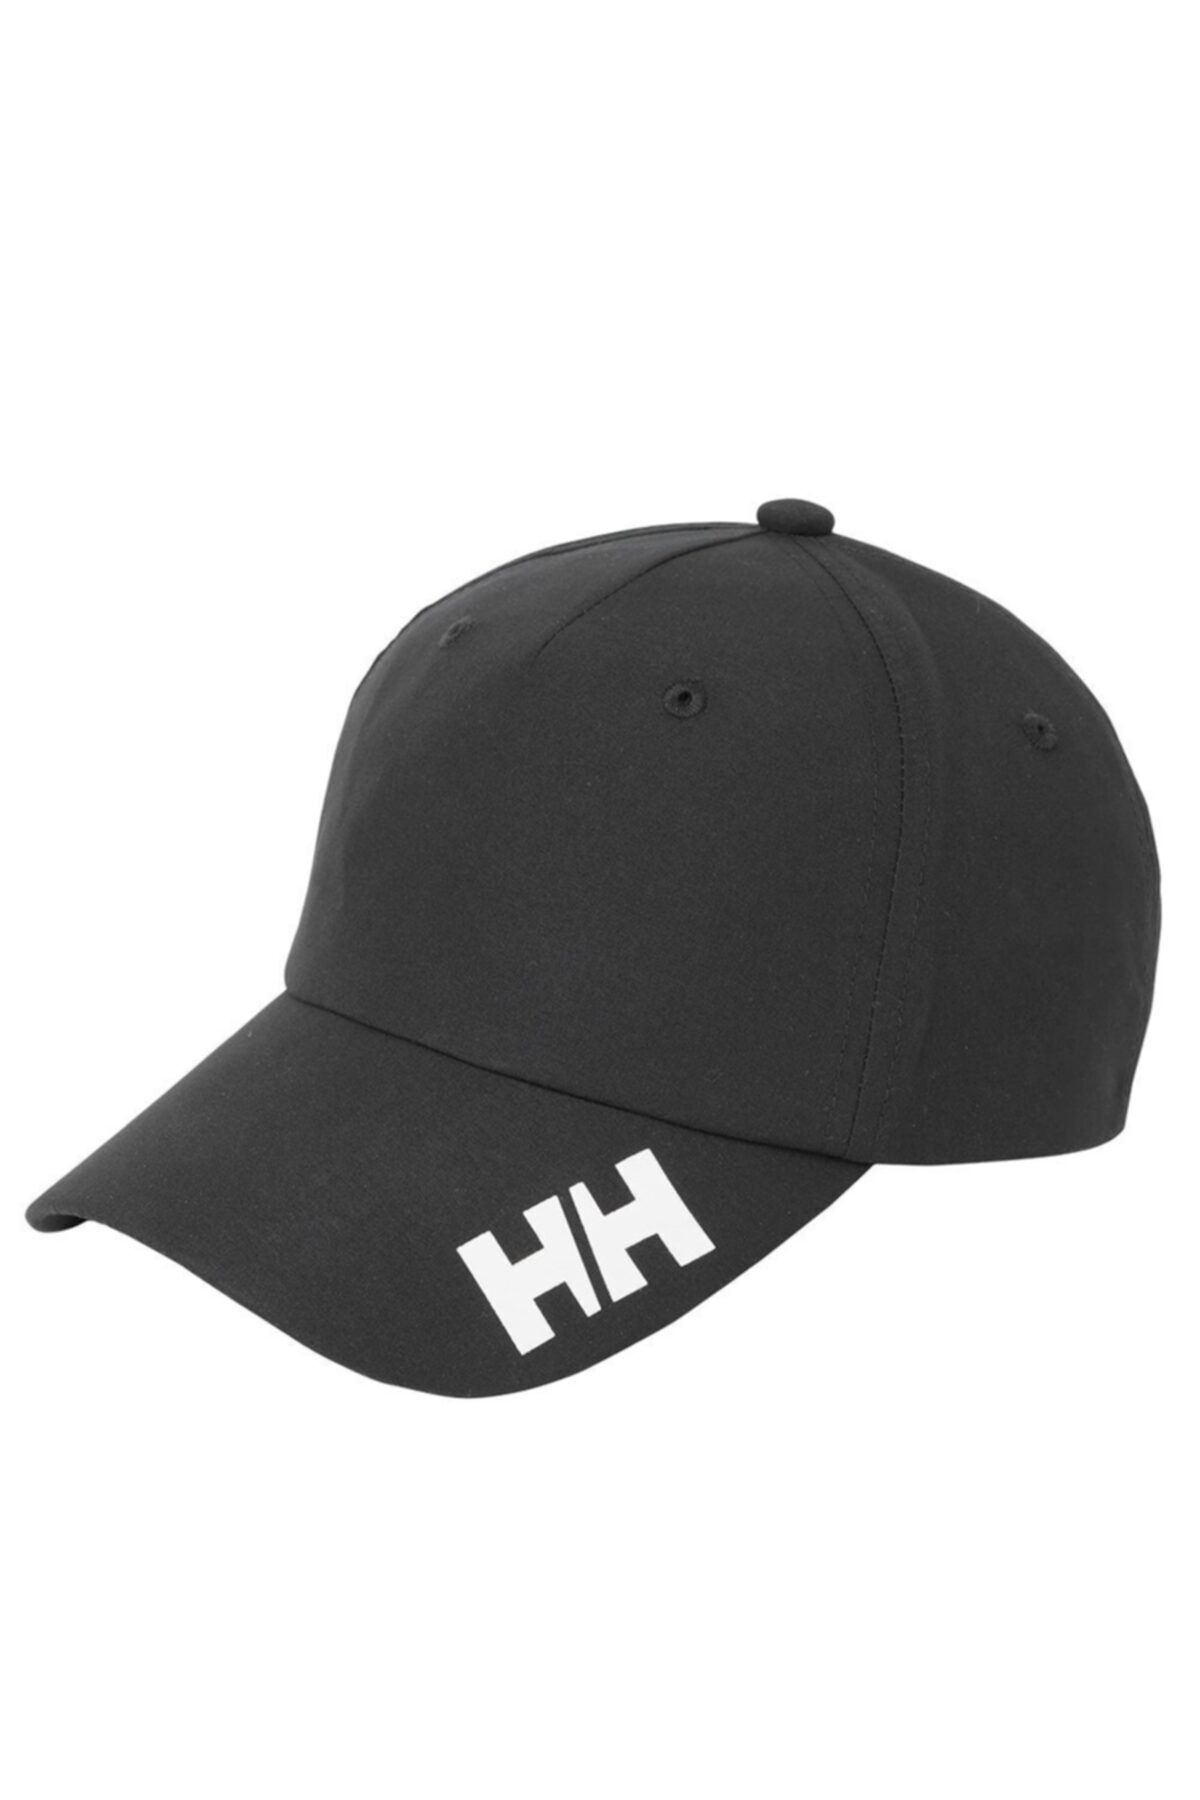 Helly Hansen Hh Crew Cap